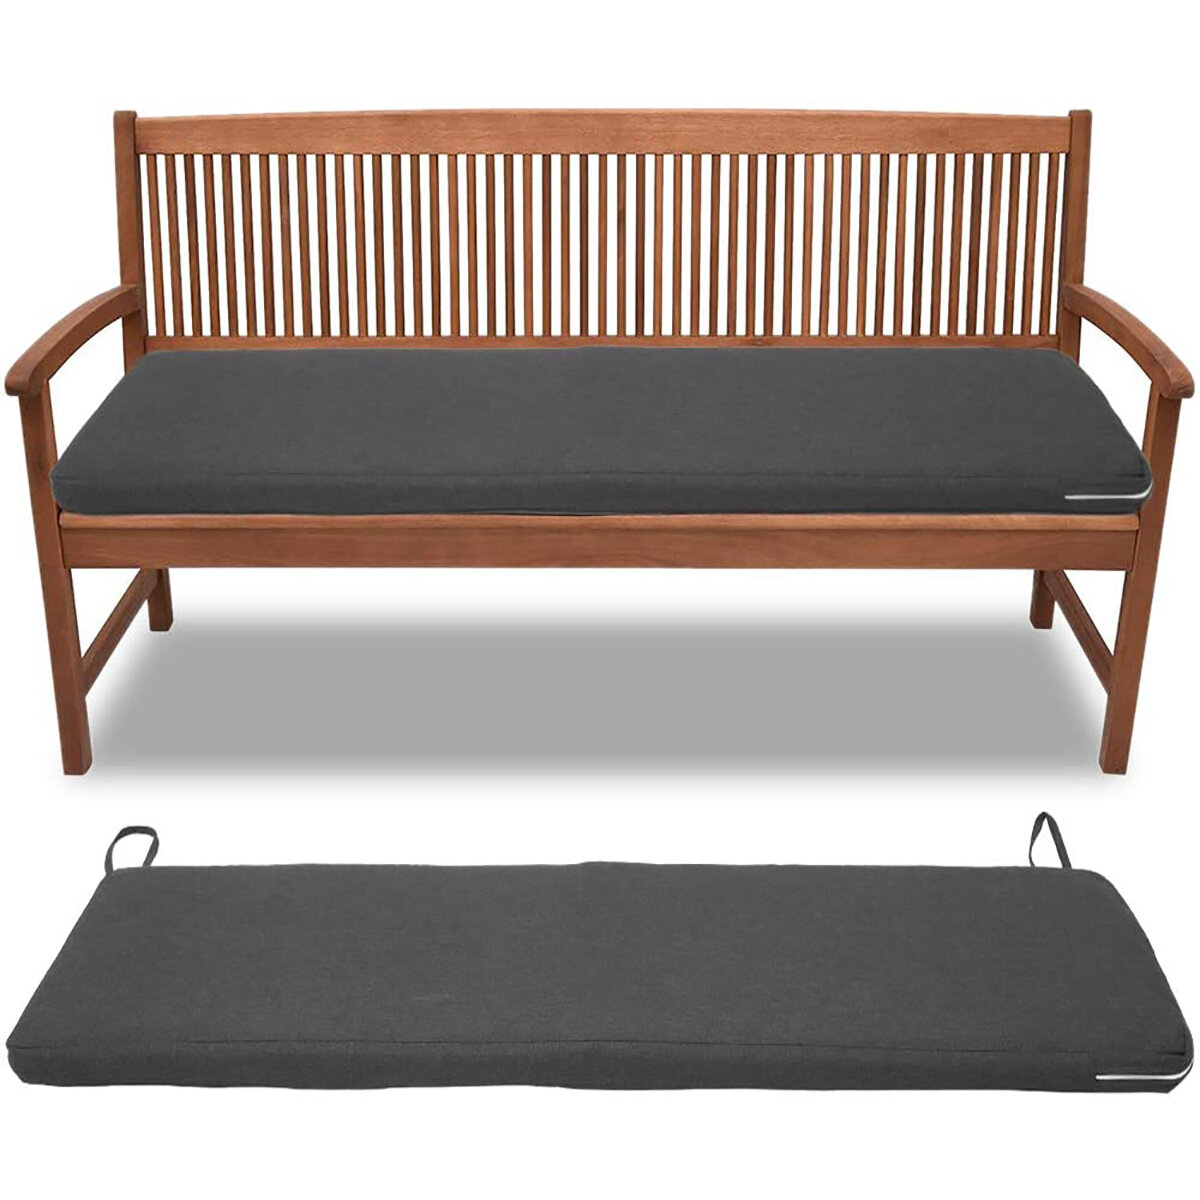 Outdoor Chair Cushion Waterproof Bench Seat Mat Soft Long Chair Pads Camping Garden Patio Furniture